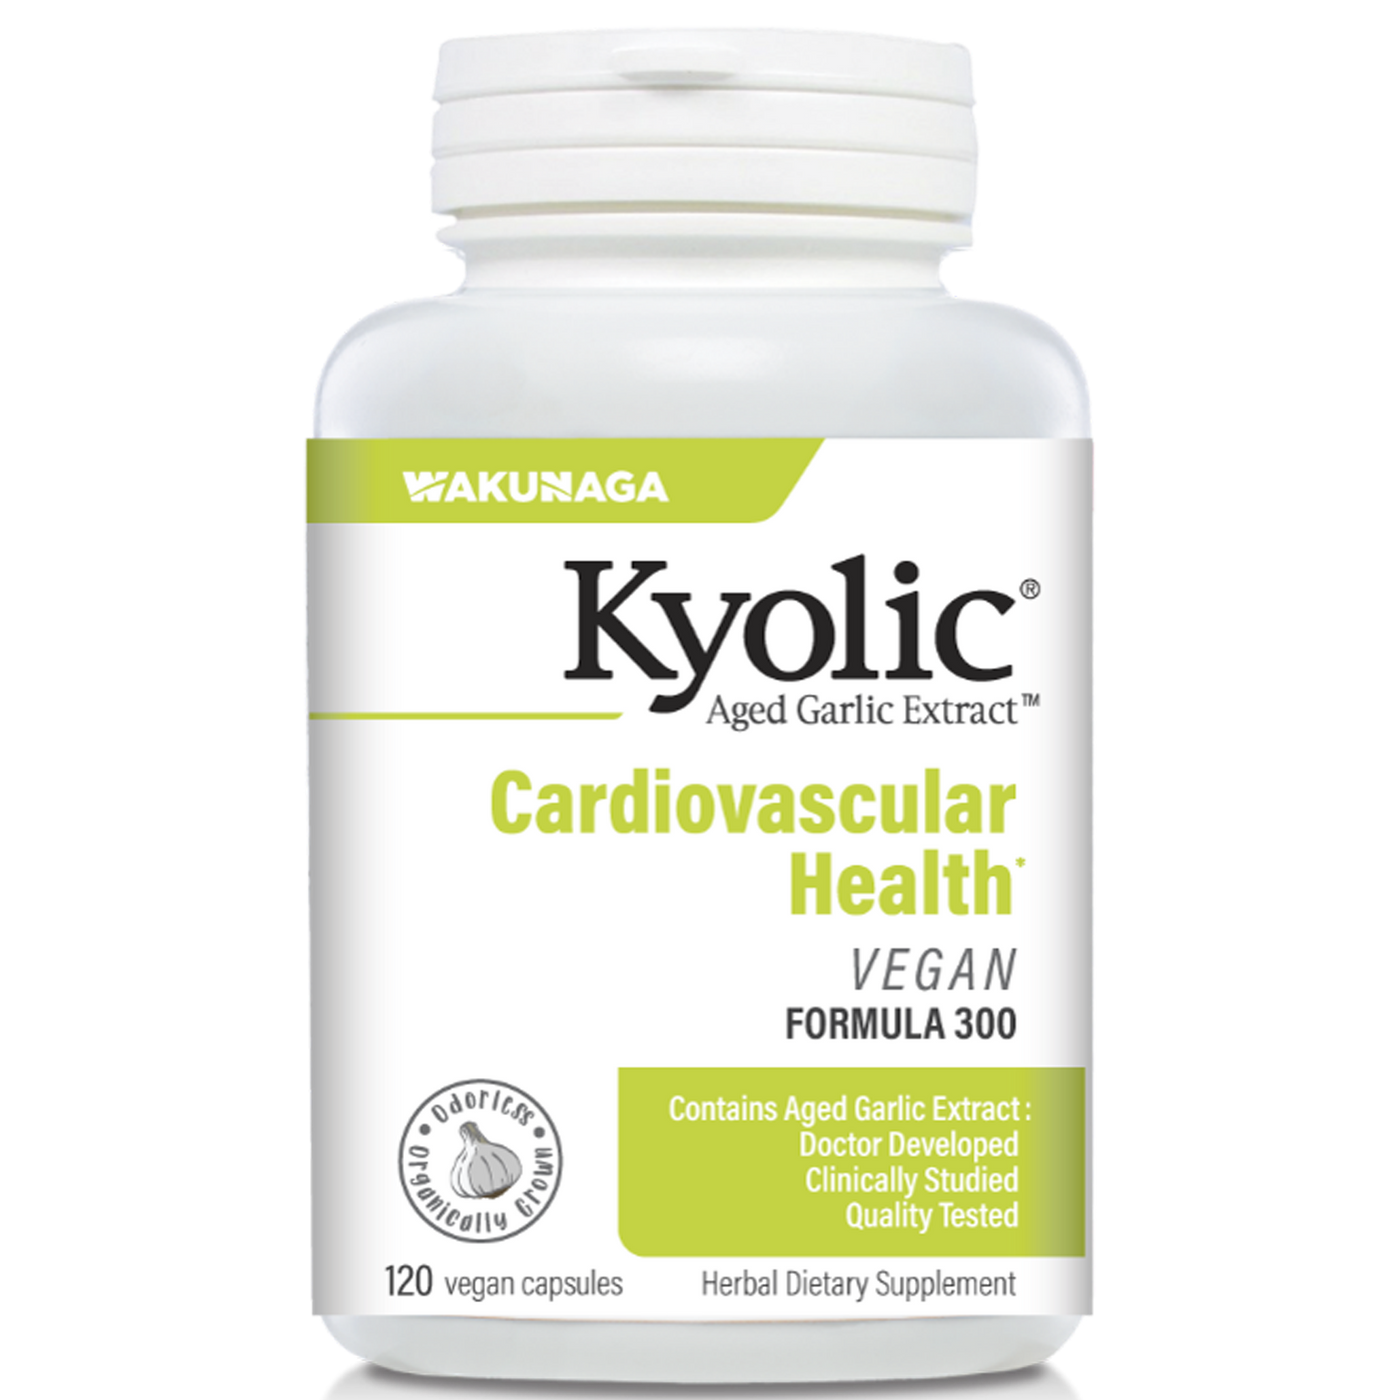 Kyolic Cardiov Vegan For 300 120 vegcaps Curated Wellness